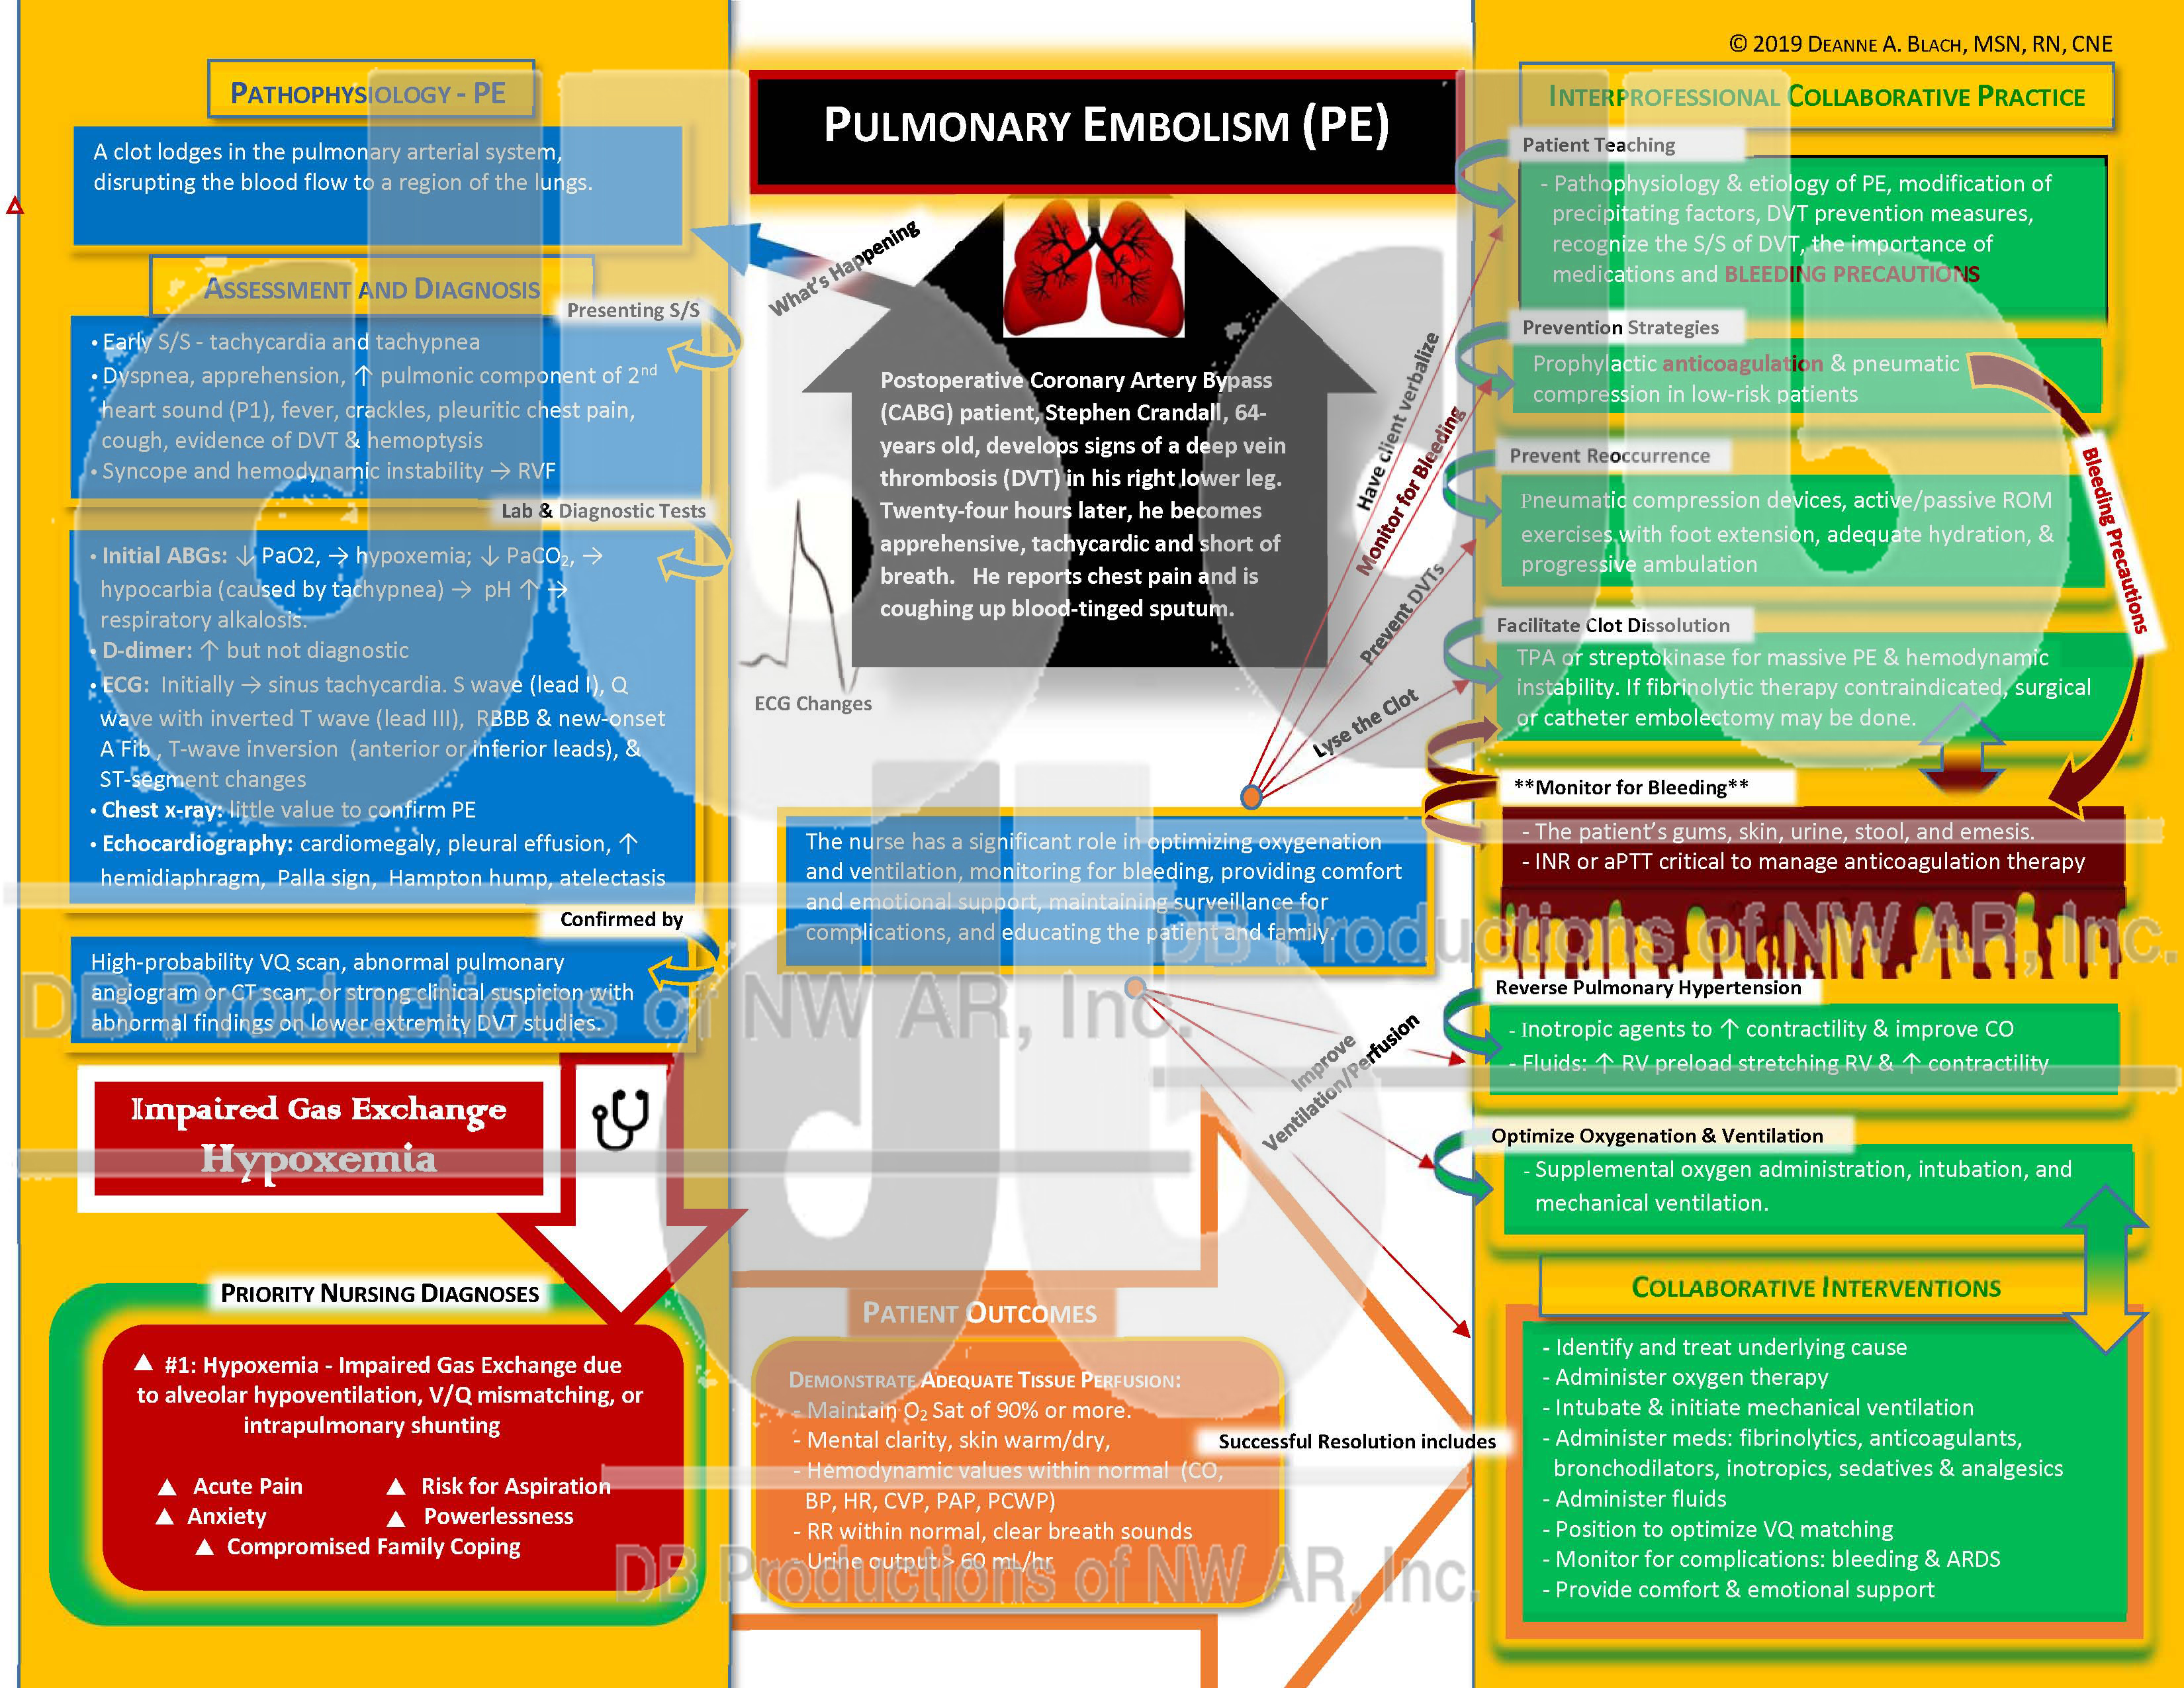 Pulmonary Embolism Concept Map Deanne Blach Db Productions